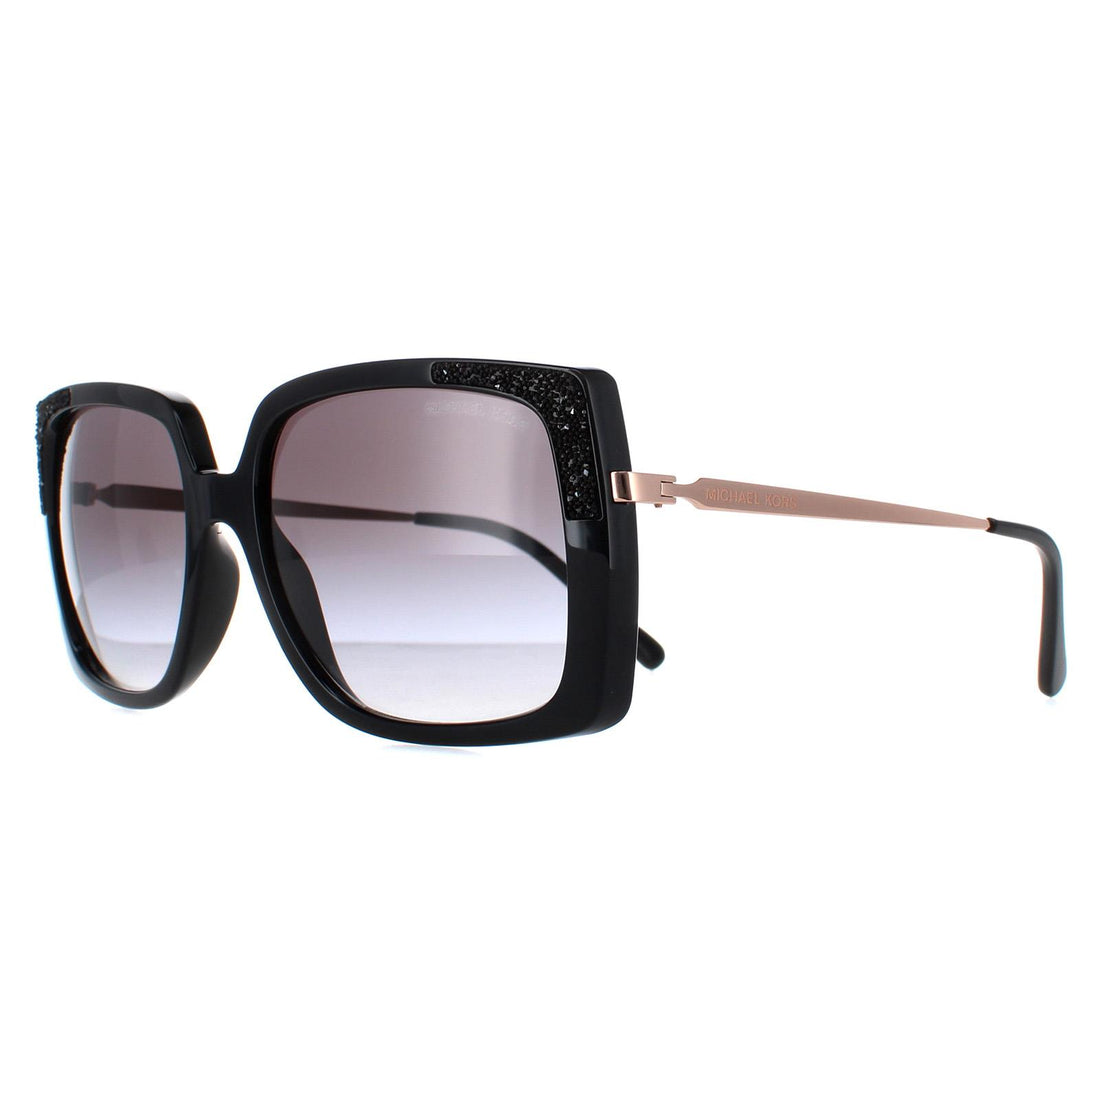 Michael Kors Sunglasses Rochelle MK2131 33328G Black Dark Grey Gradient